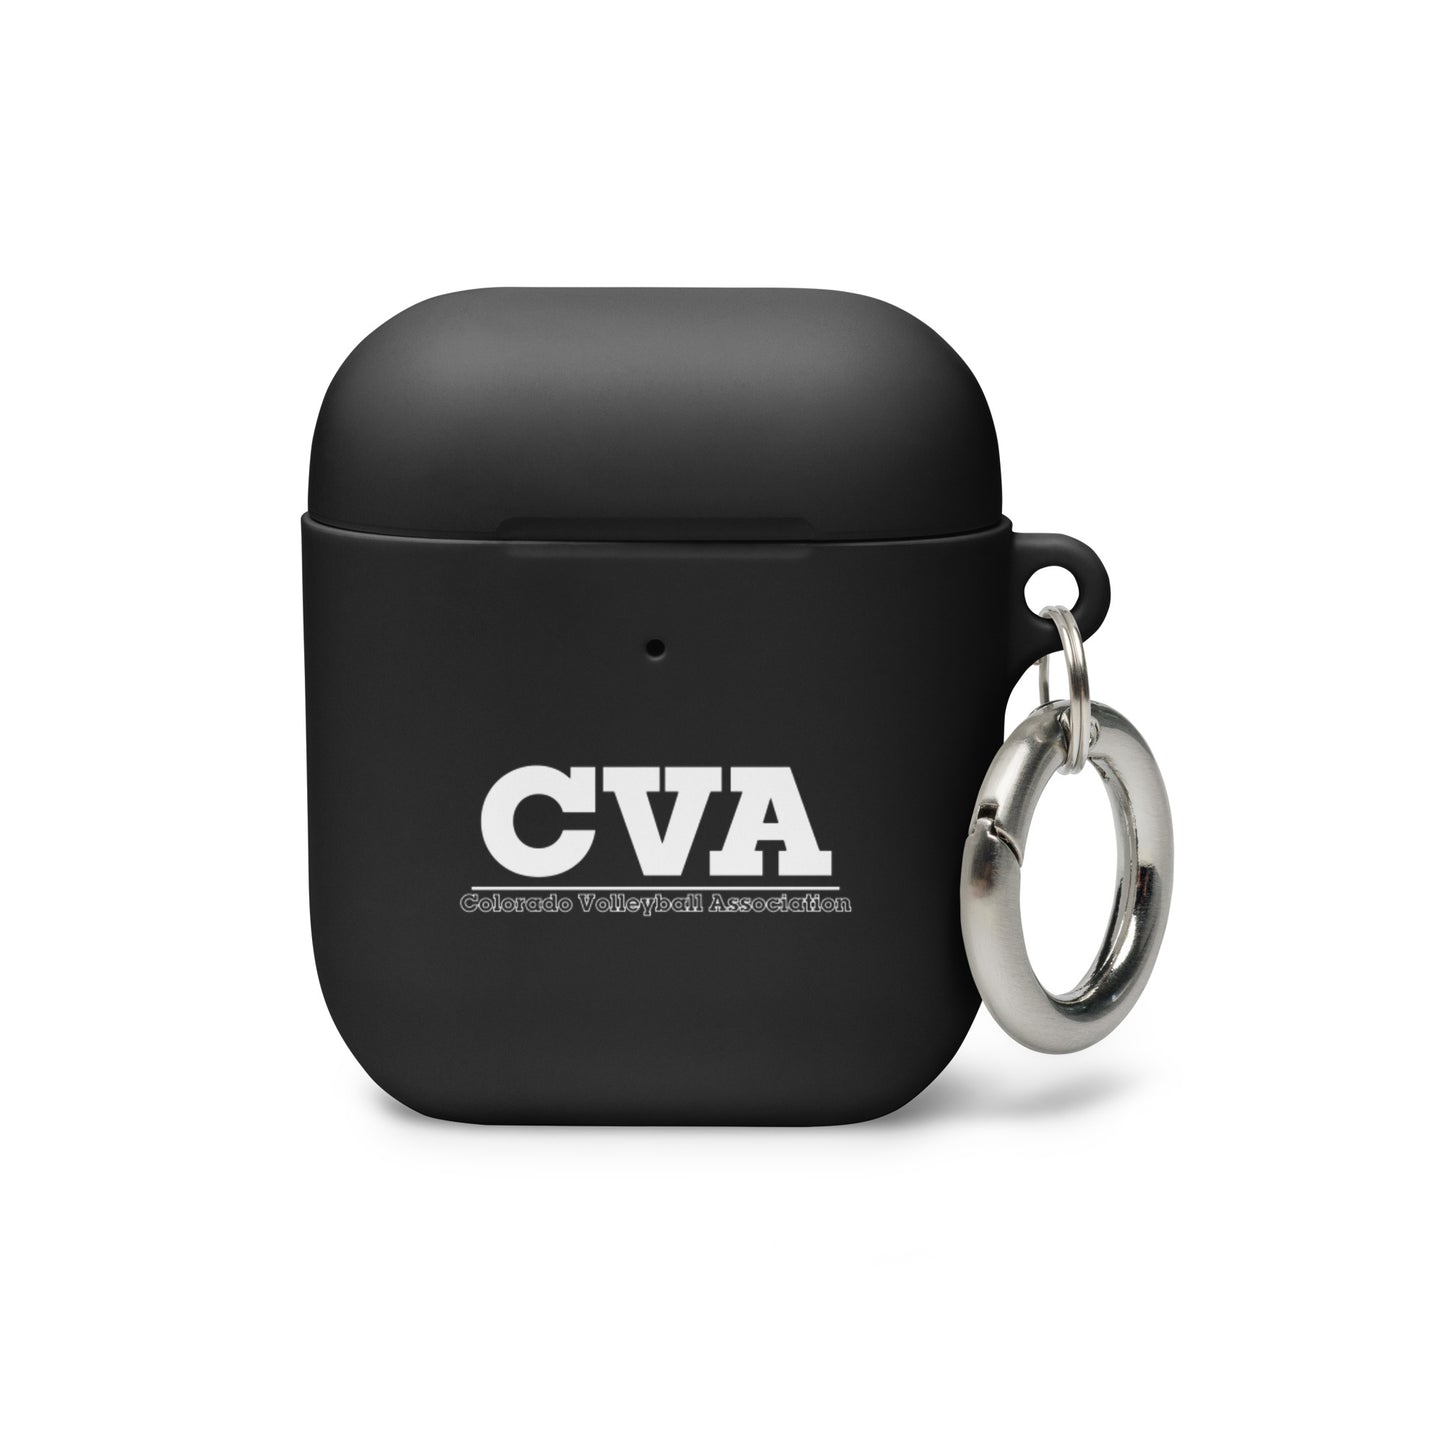 AirPods Case: CVA Logo - Multiple Color Options